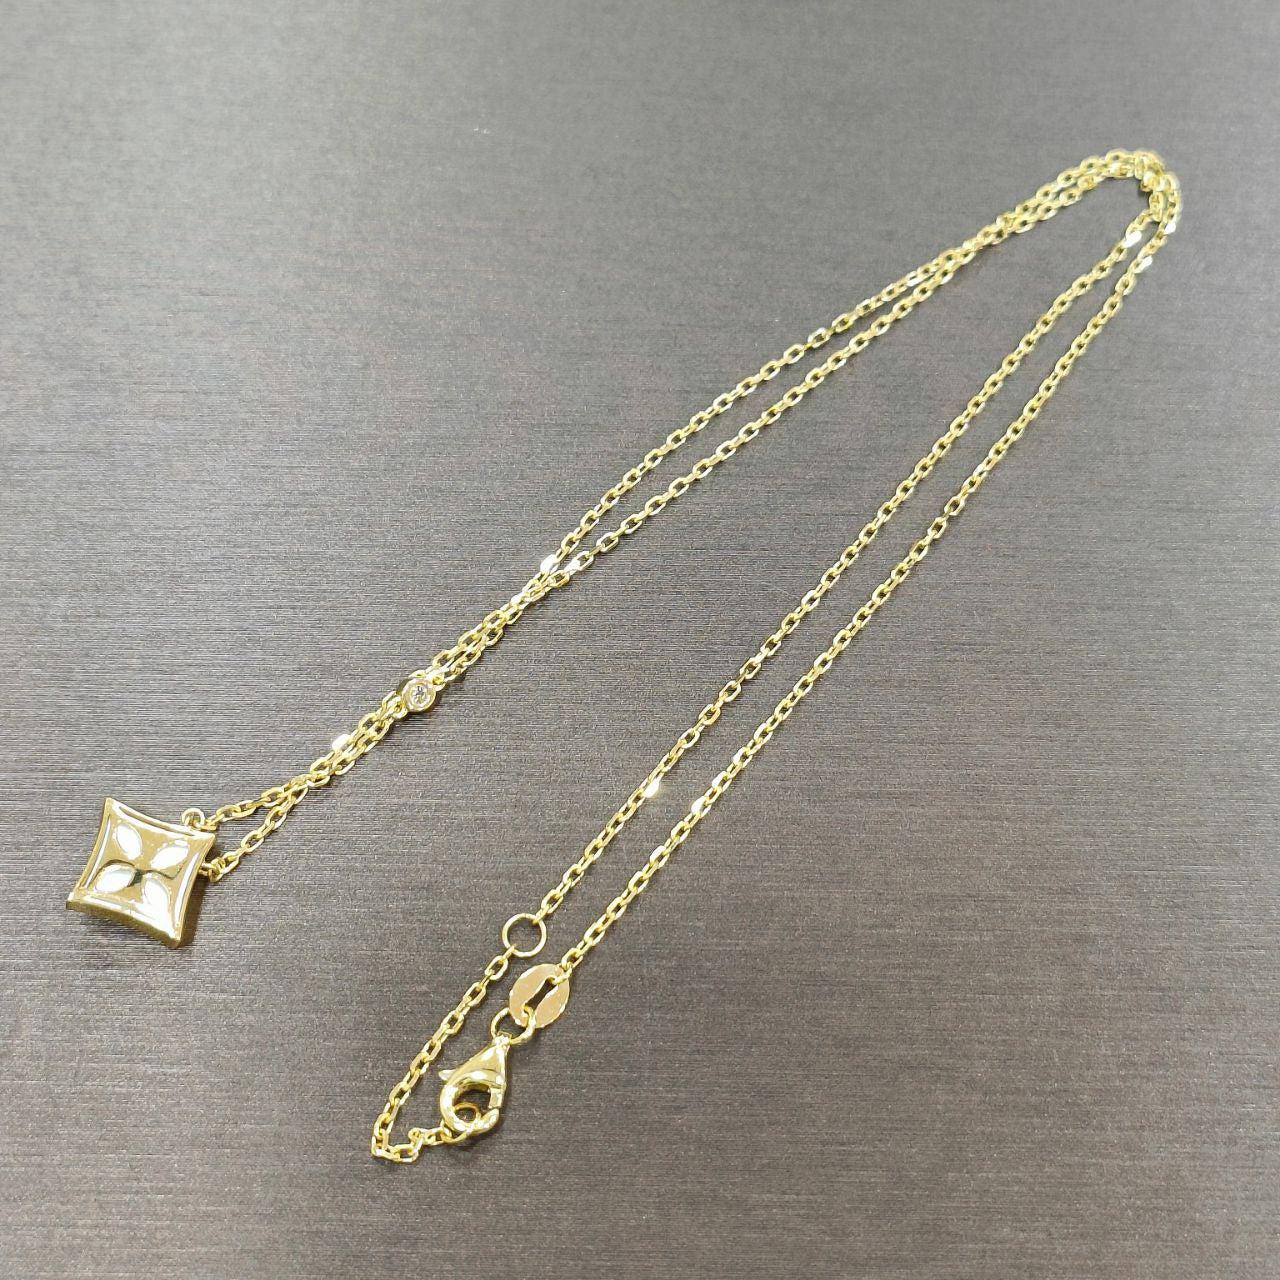 22k / 916 Gold VL Necklace-Necklaces-Best Gold Shop